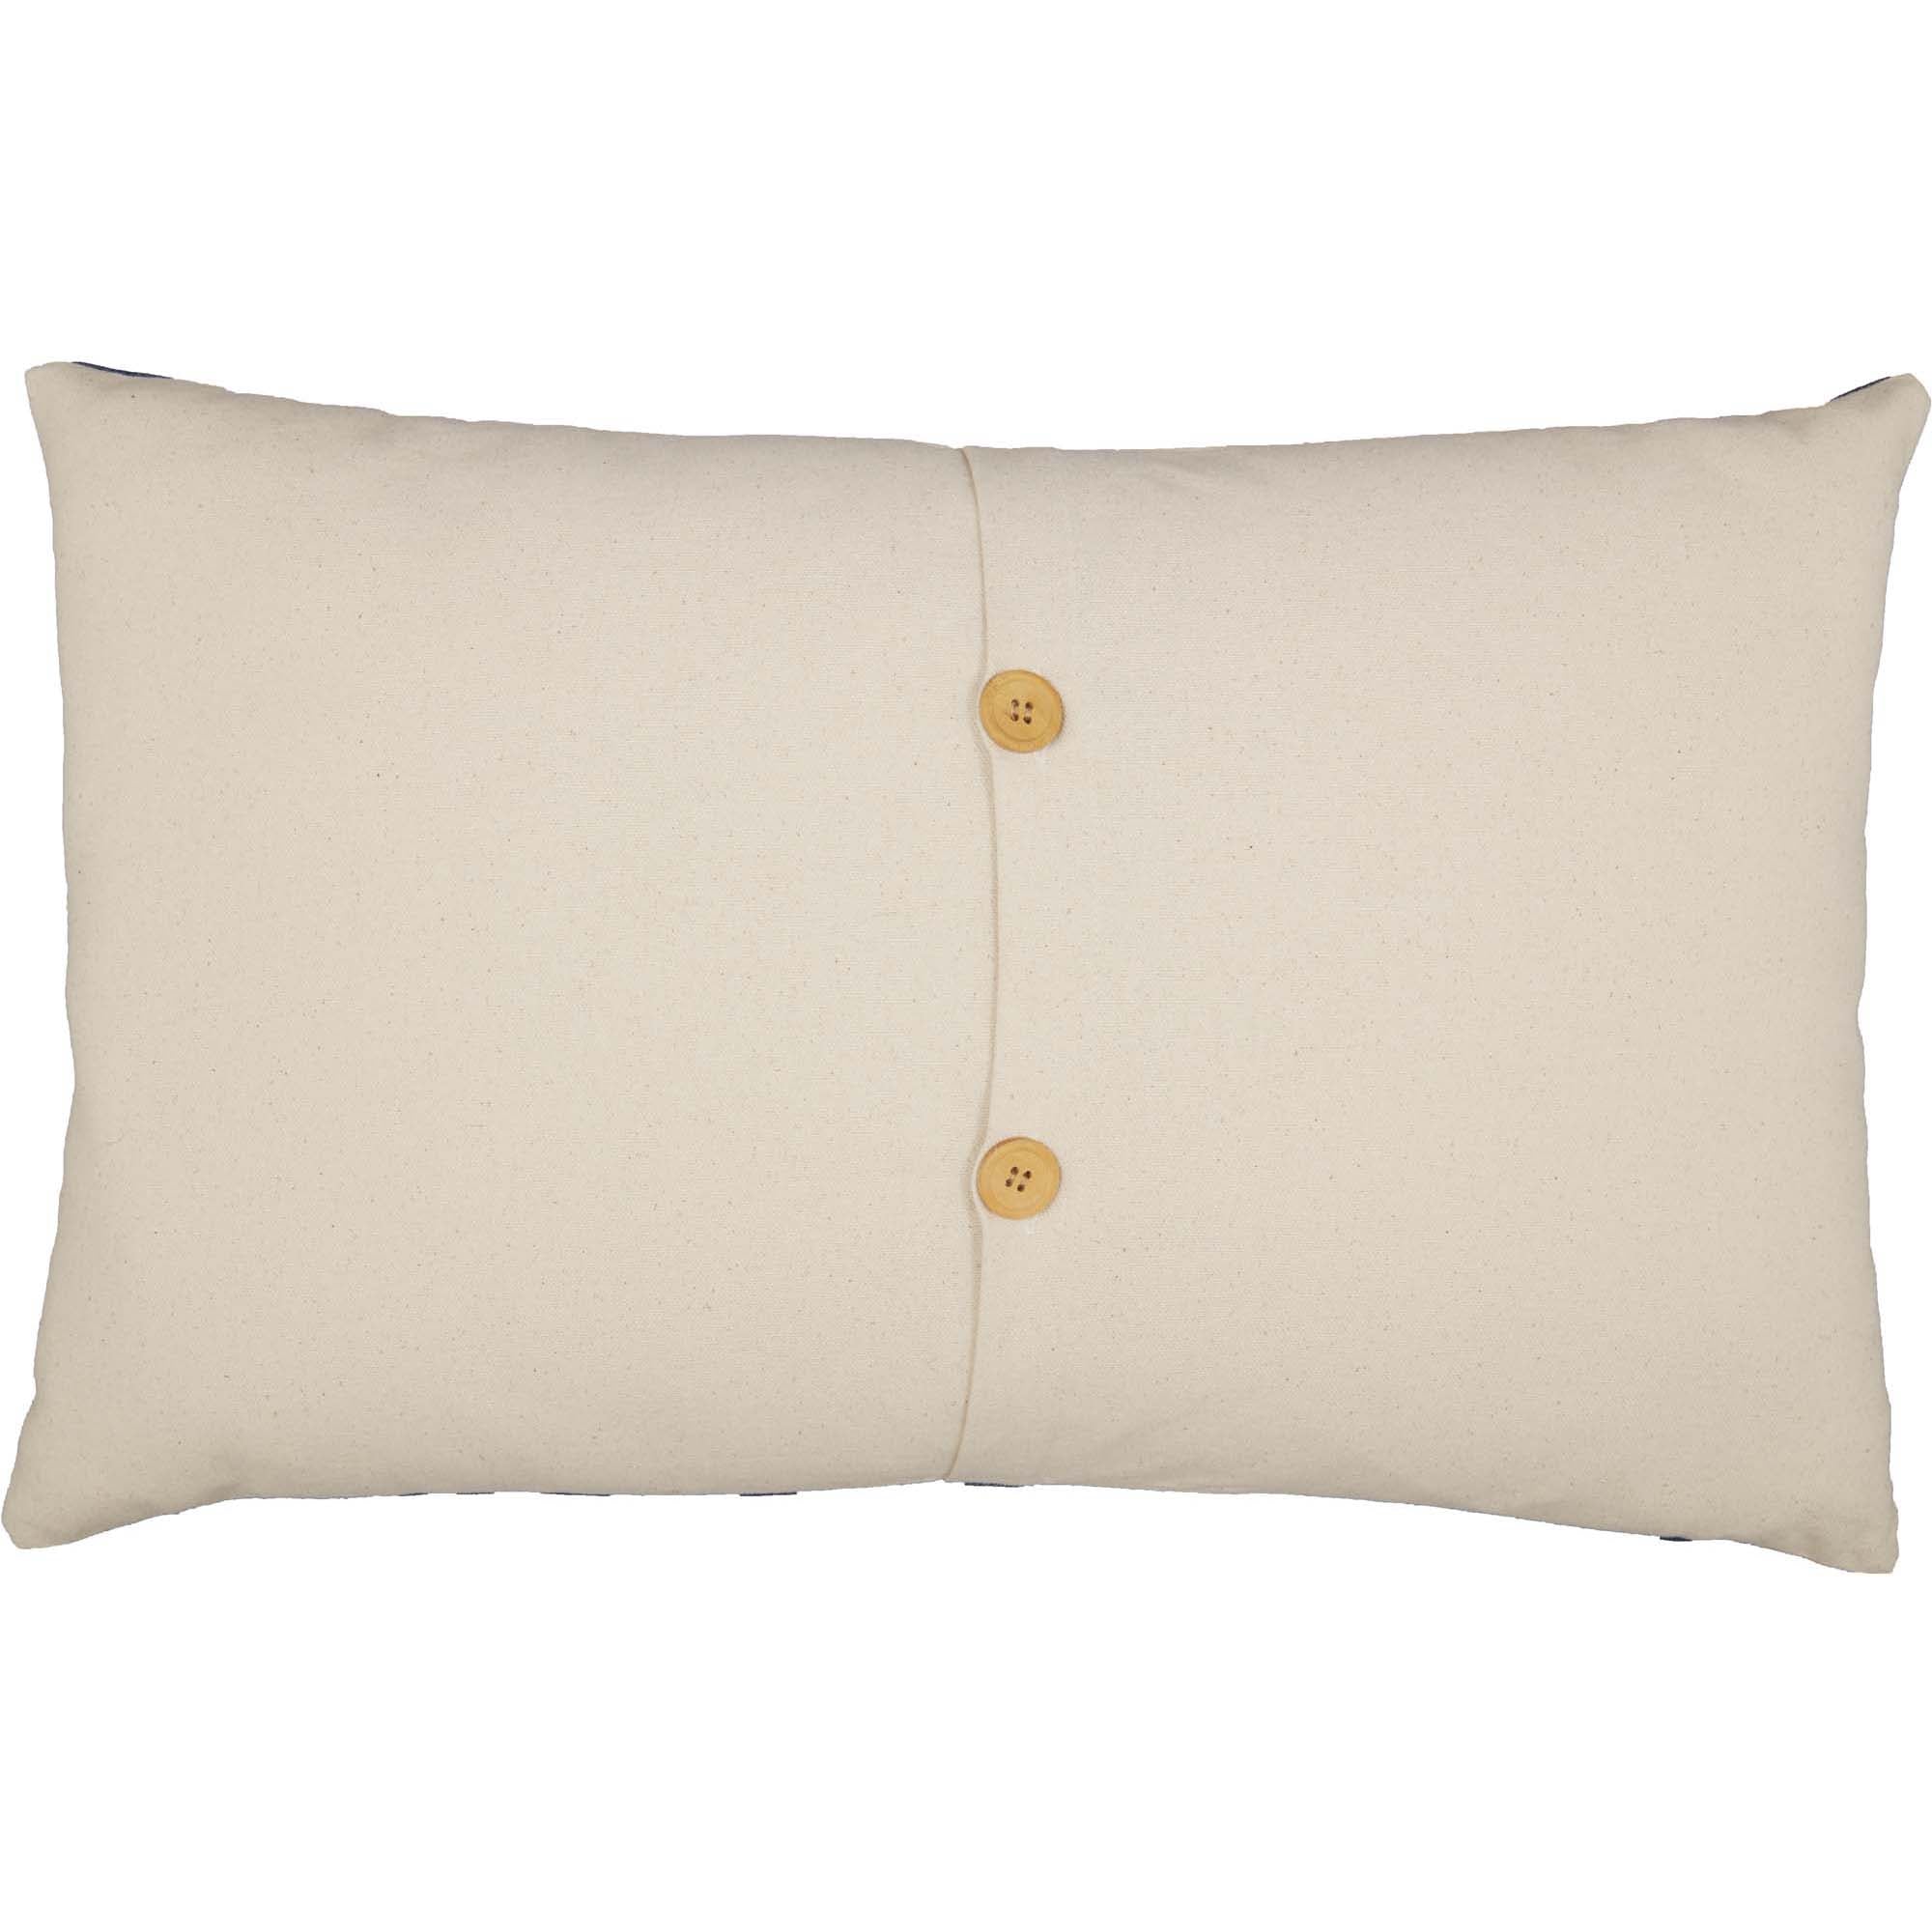 Abraham Lincoln Pillow14x22 VHC Brands